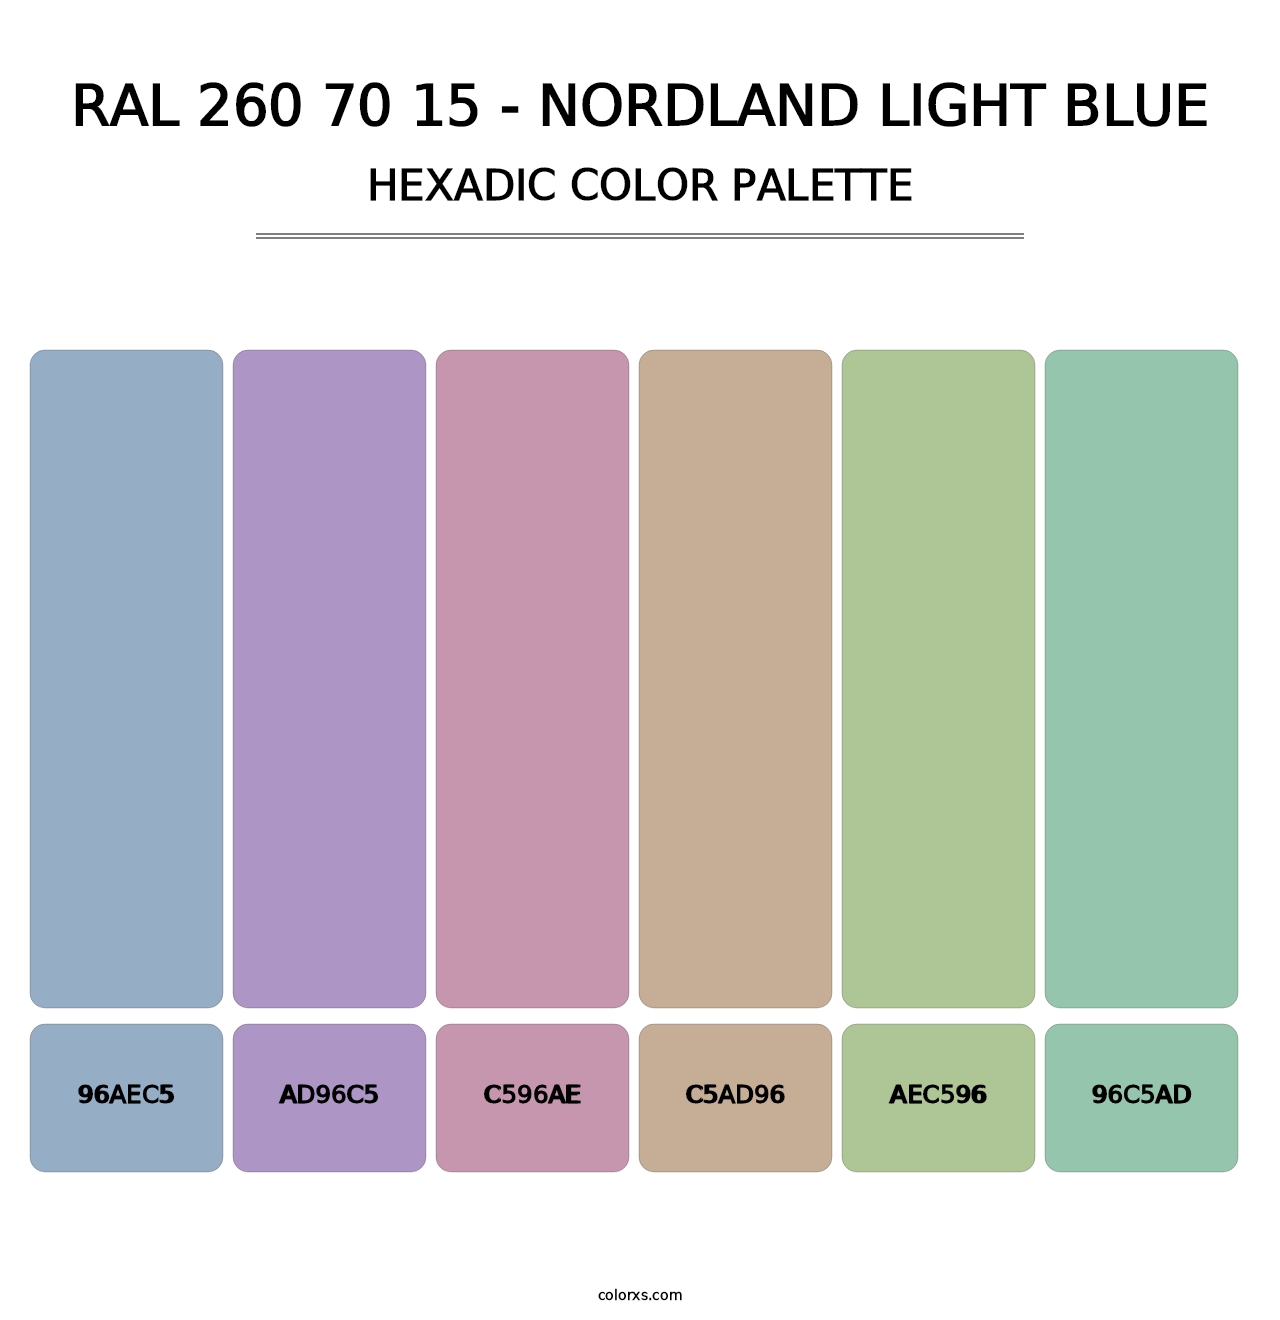 RAL 260 70 15 - Nordland Light Blue - Hexadic Color Palette